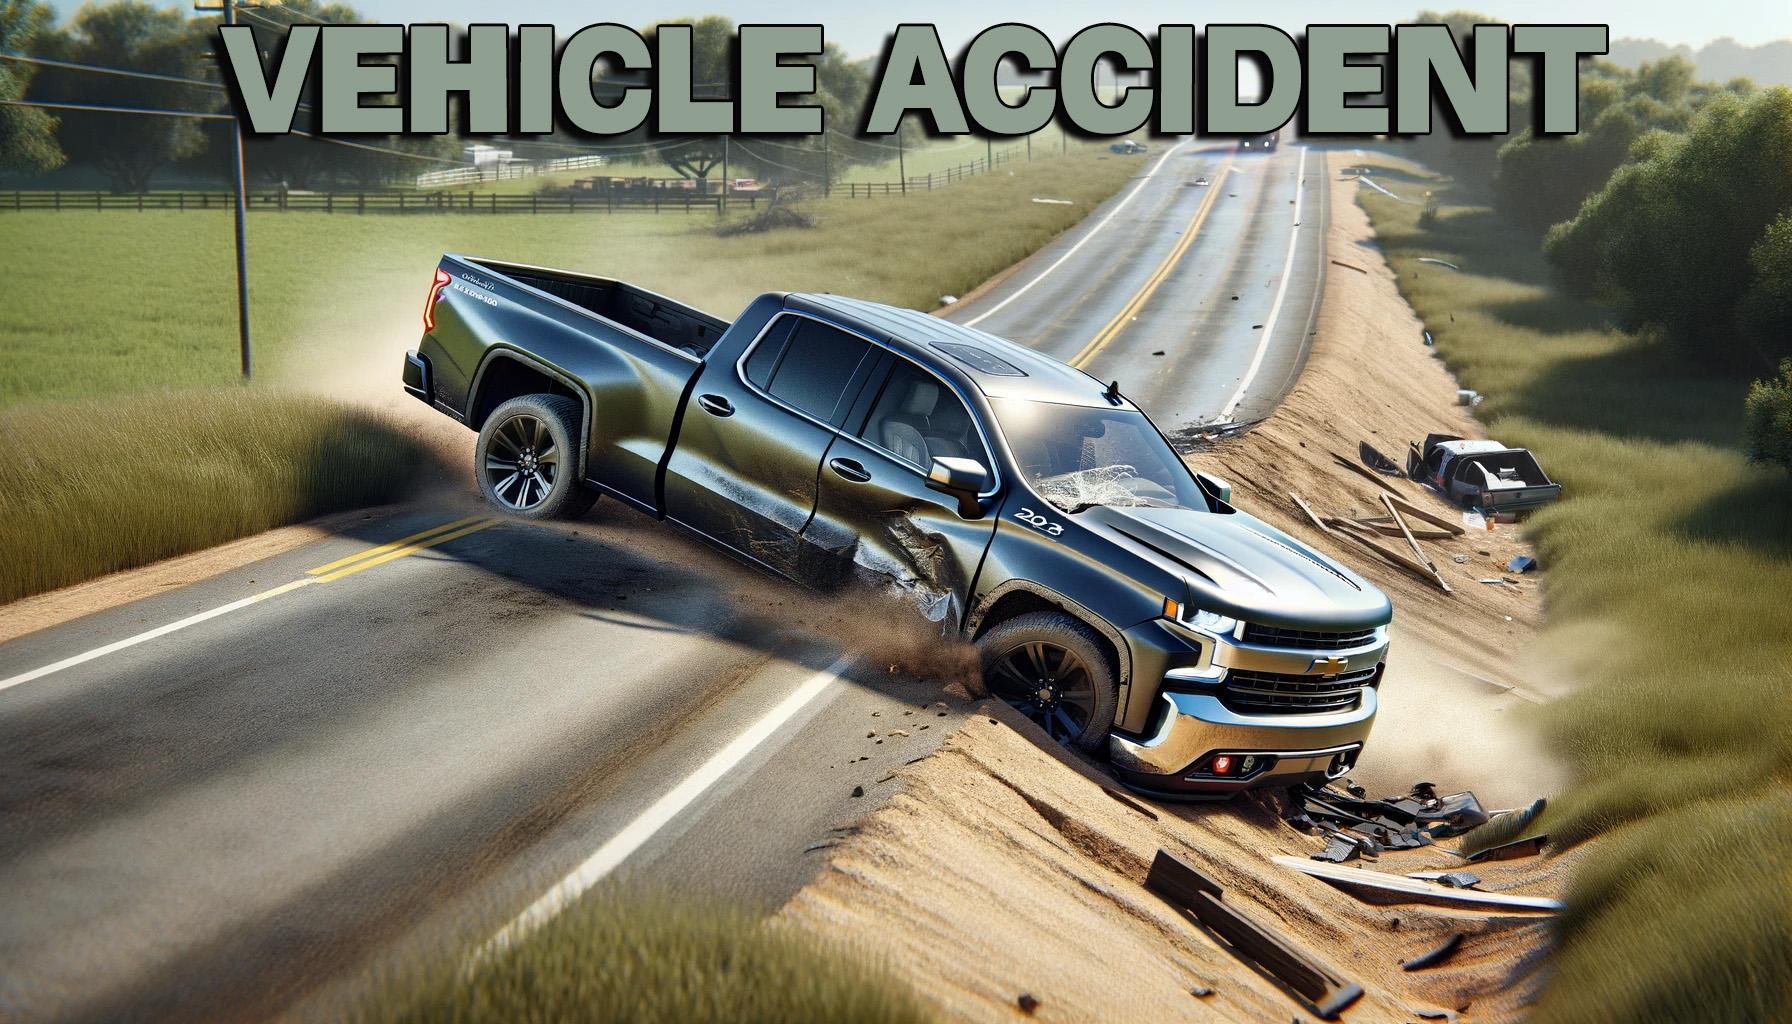 Chevy Silverado pickup vehicle accident or crash news graphic